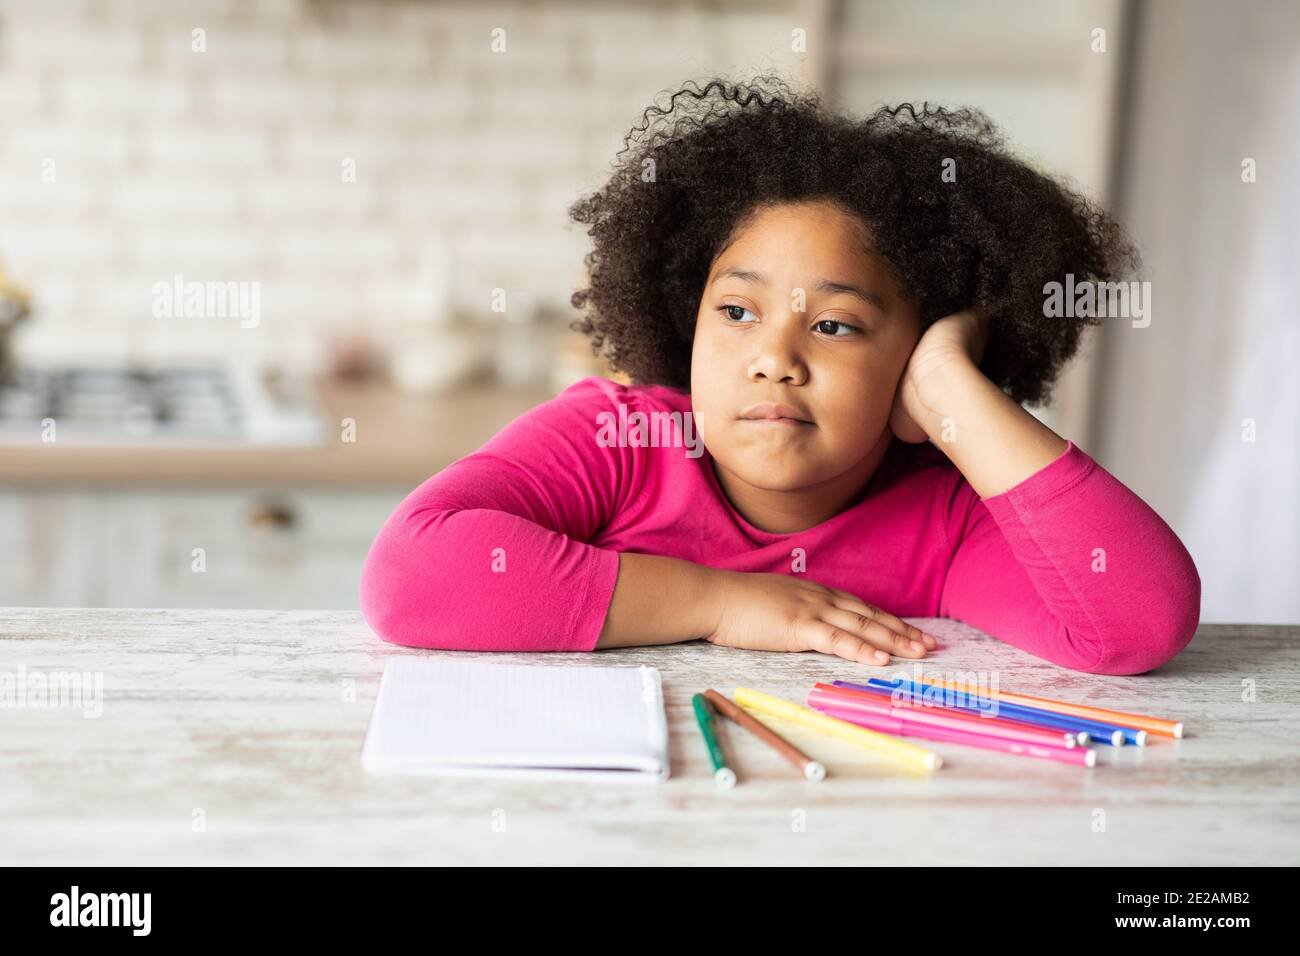 Aburrimiento. Linda chica negra aburrida sentada en la mesa de la cocina Foto de stock